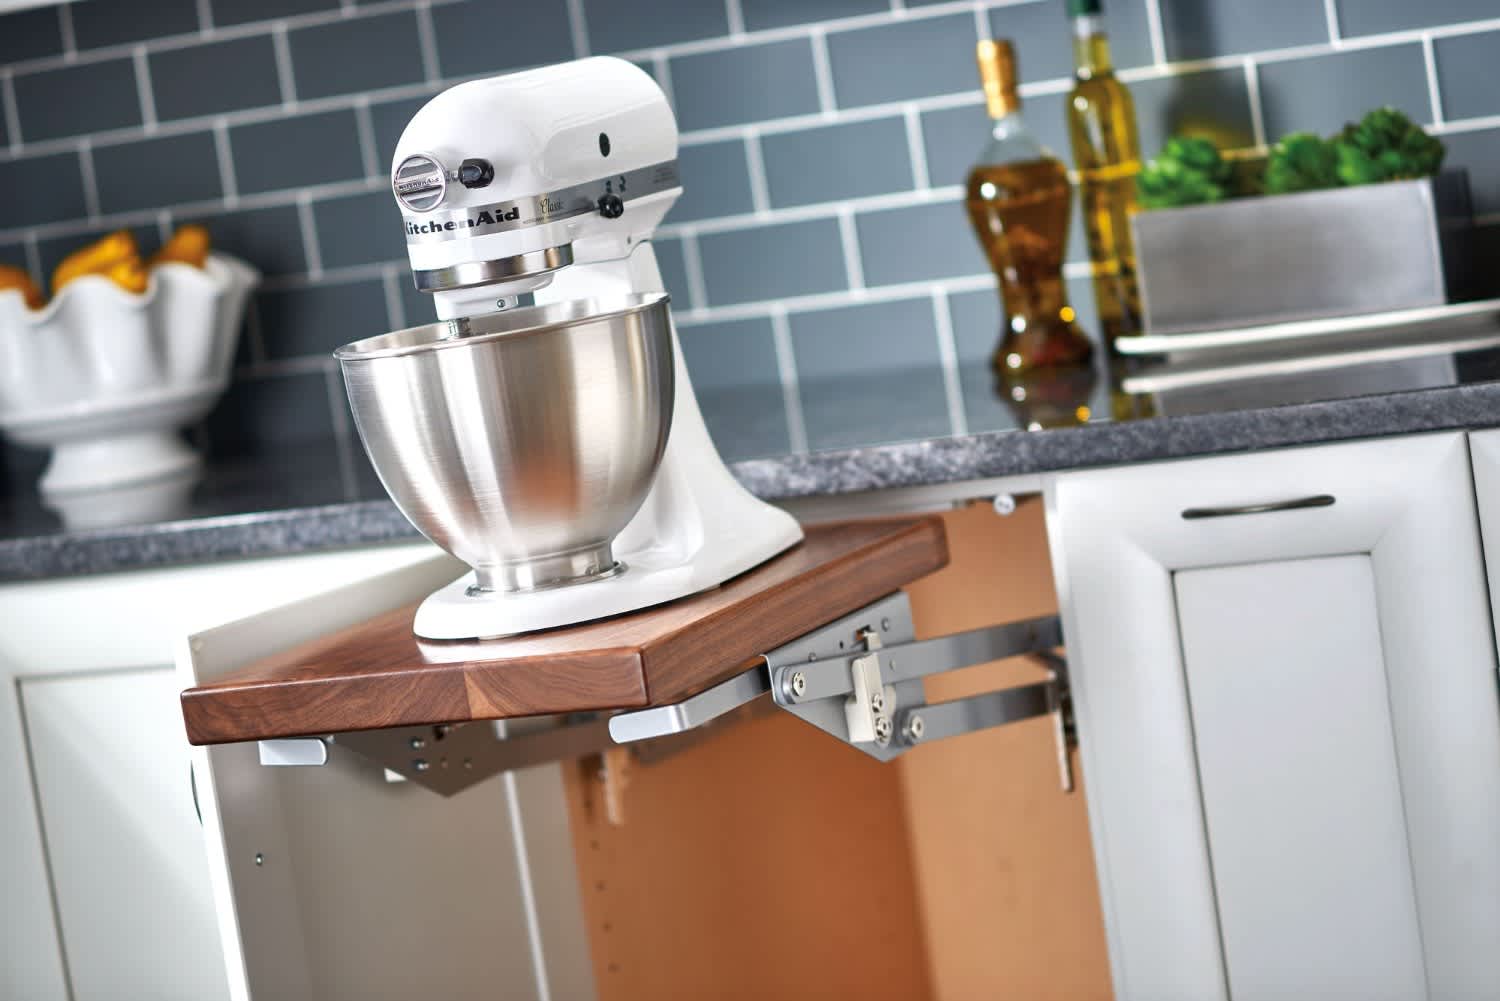 Solution for sliding your heavy Kitchenaid mixer